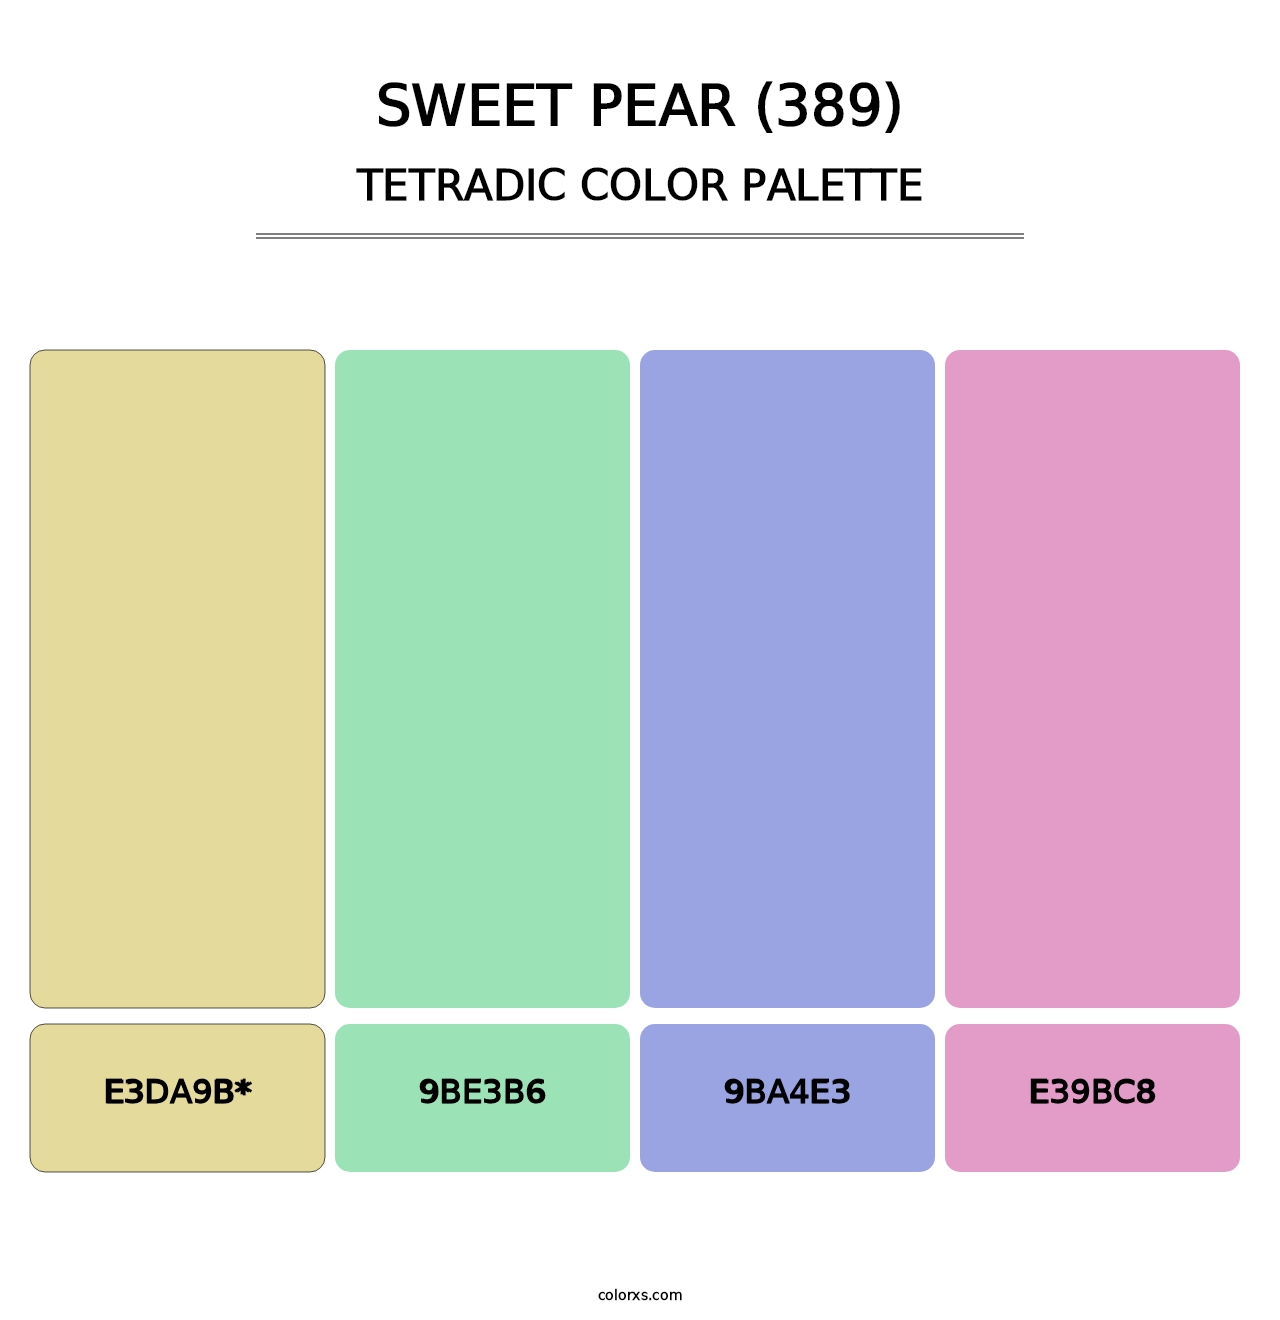 Sweet Pear (389) - Tetradic Color Palette